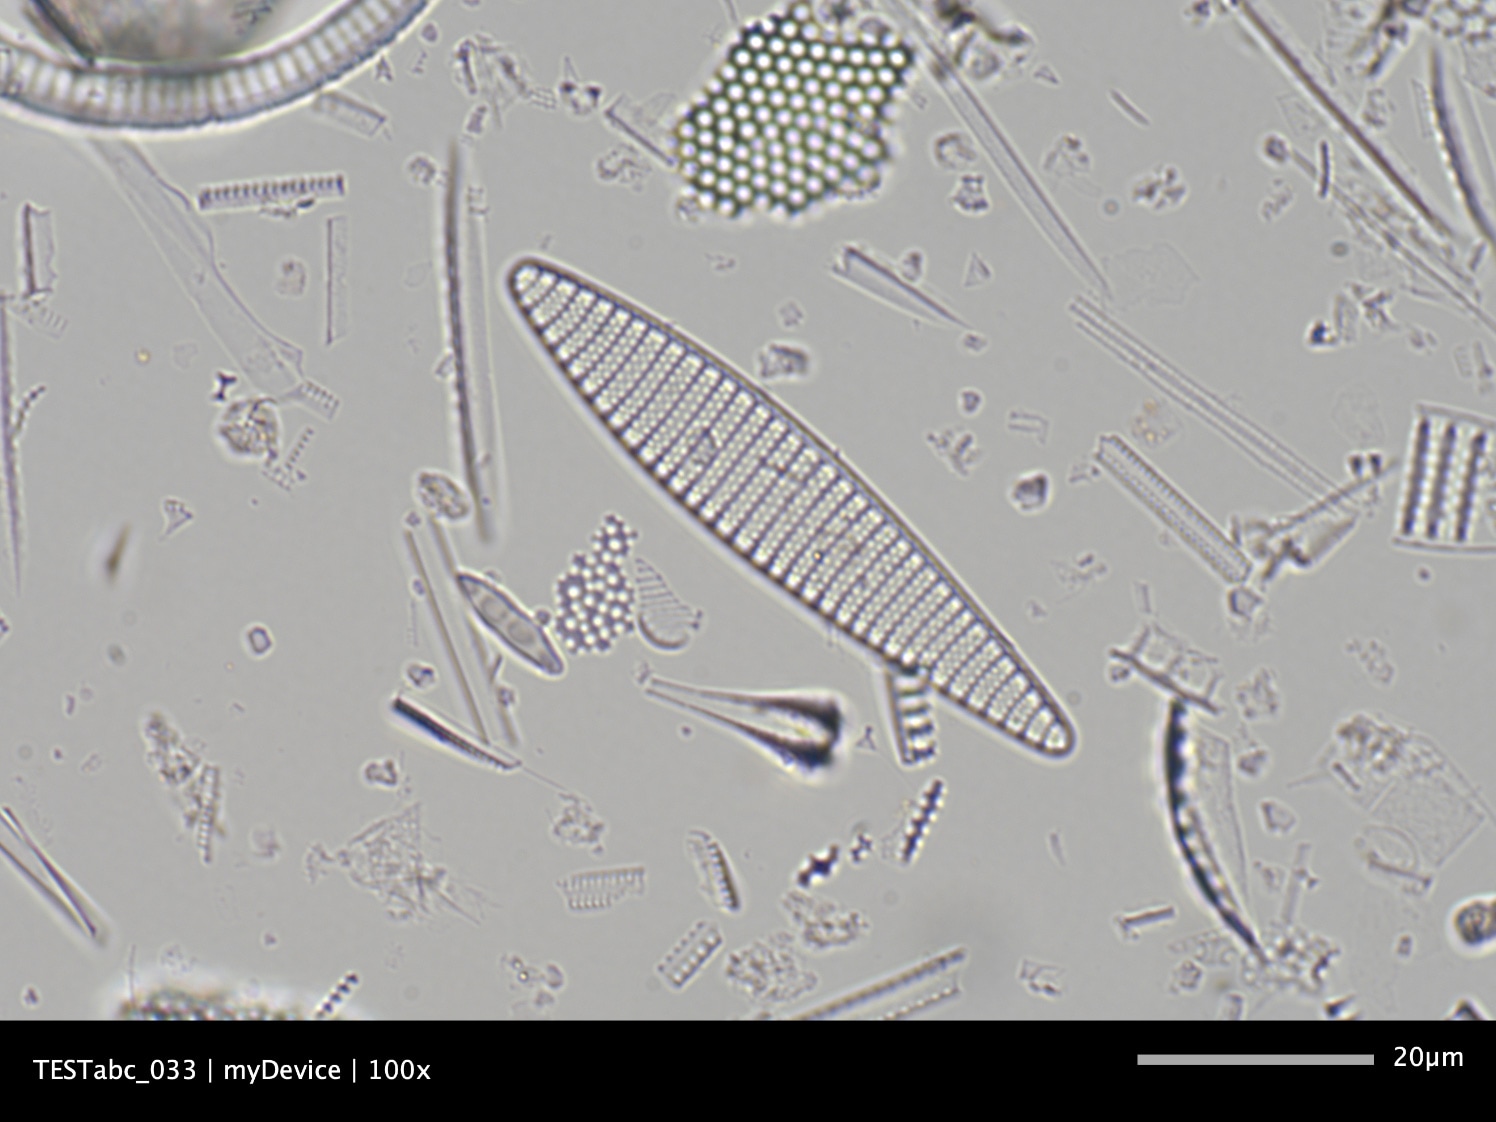 Microscope image